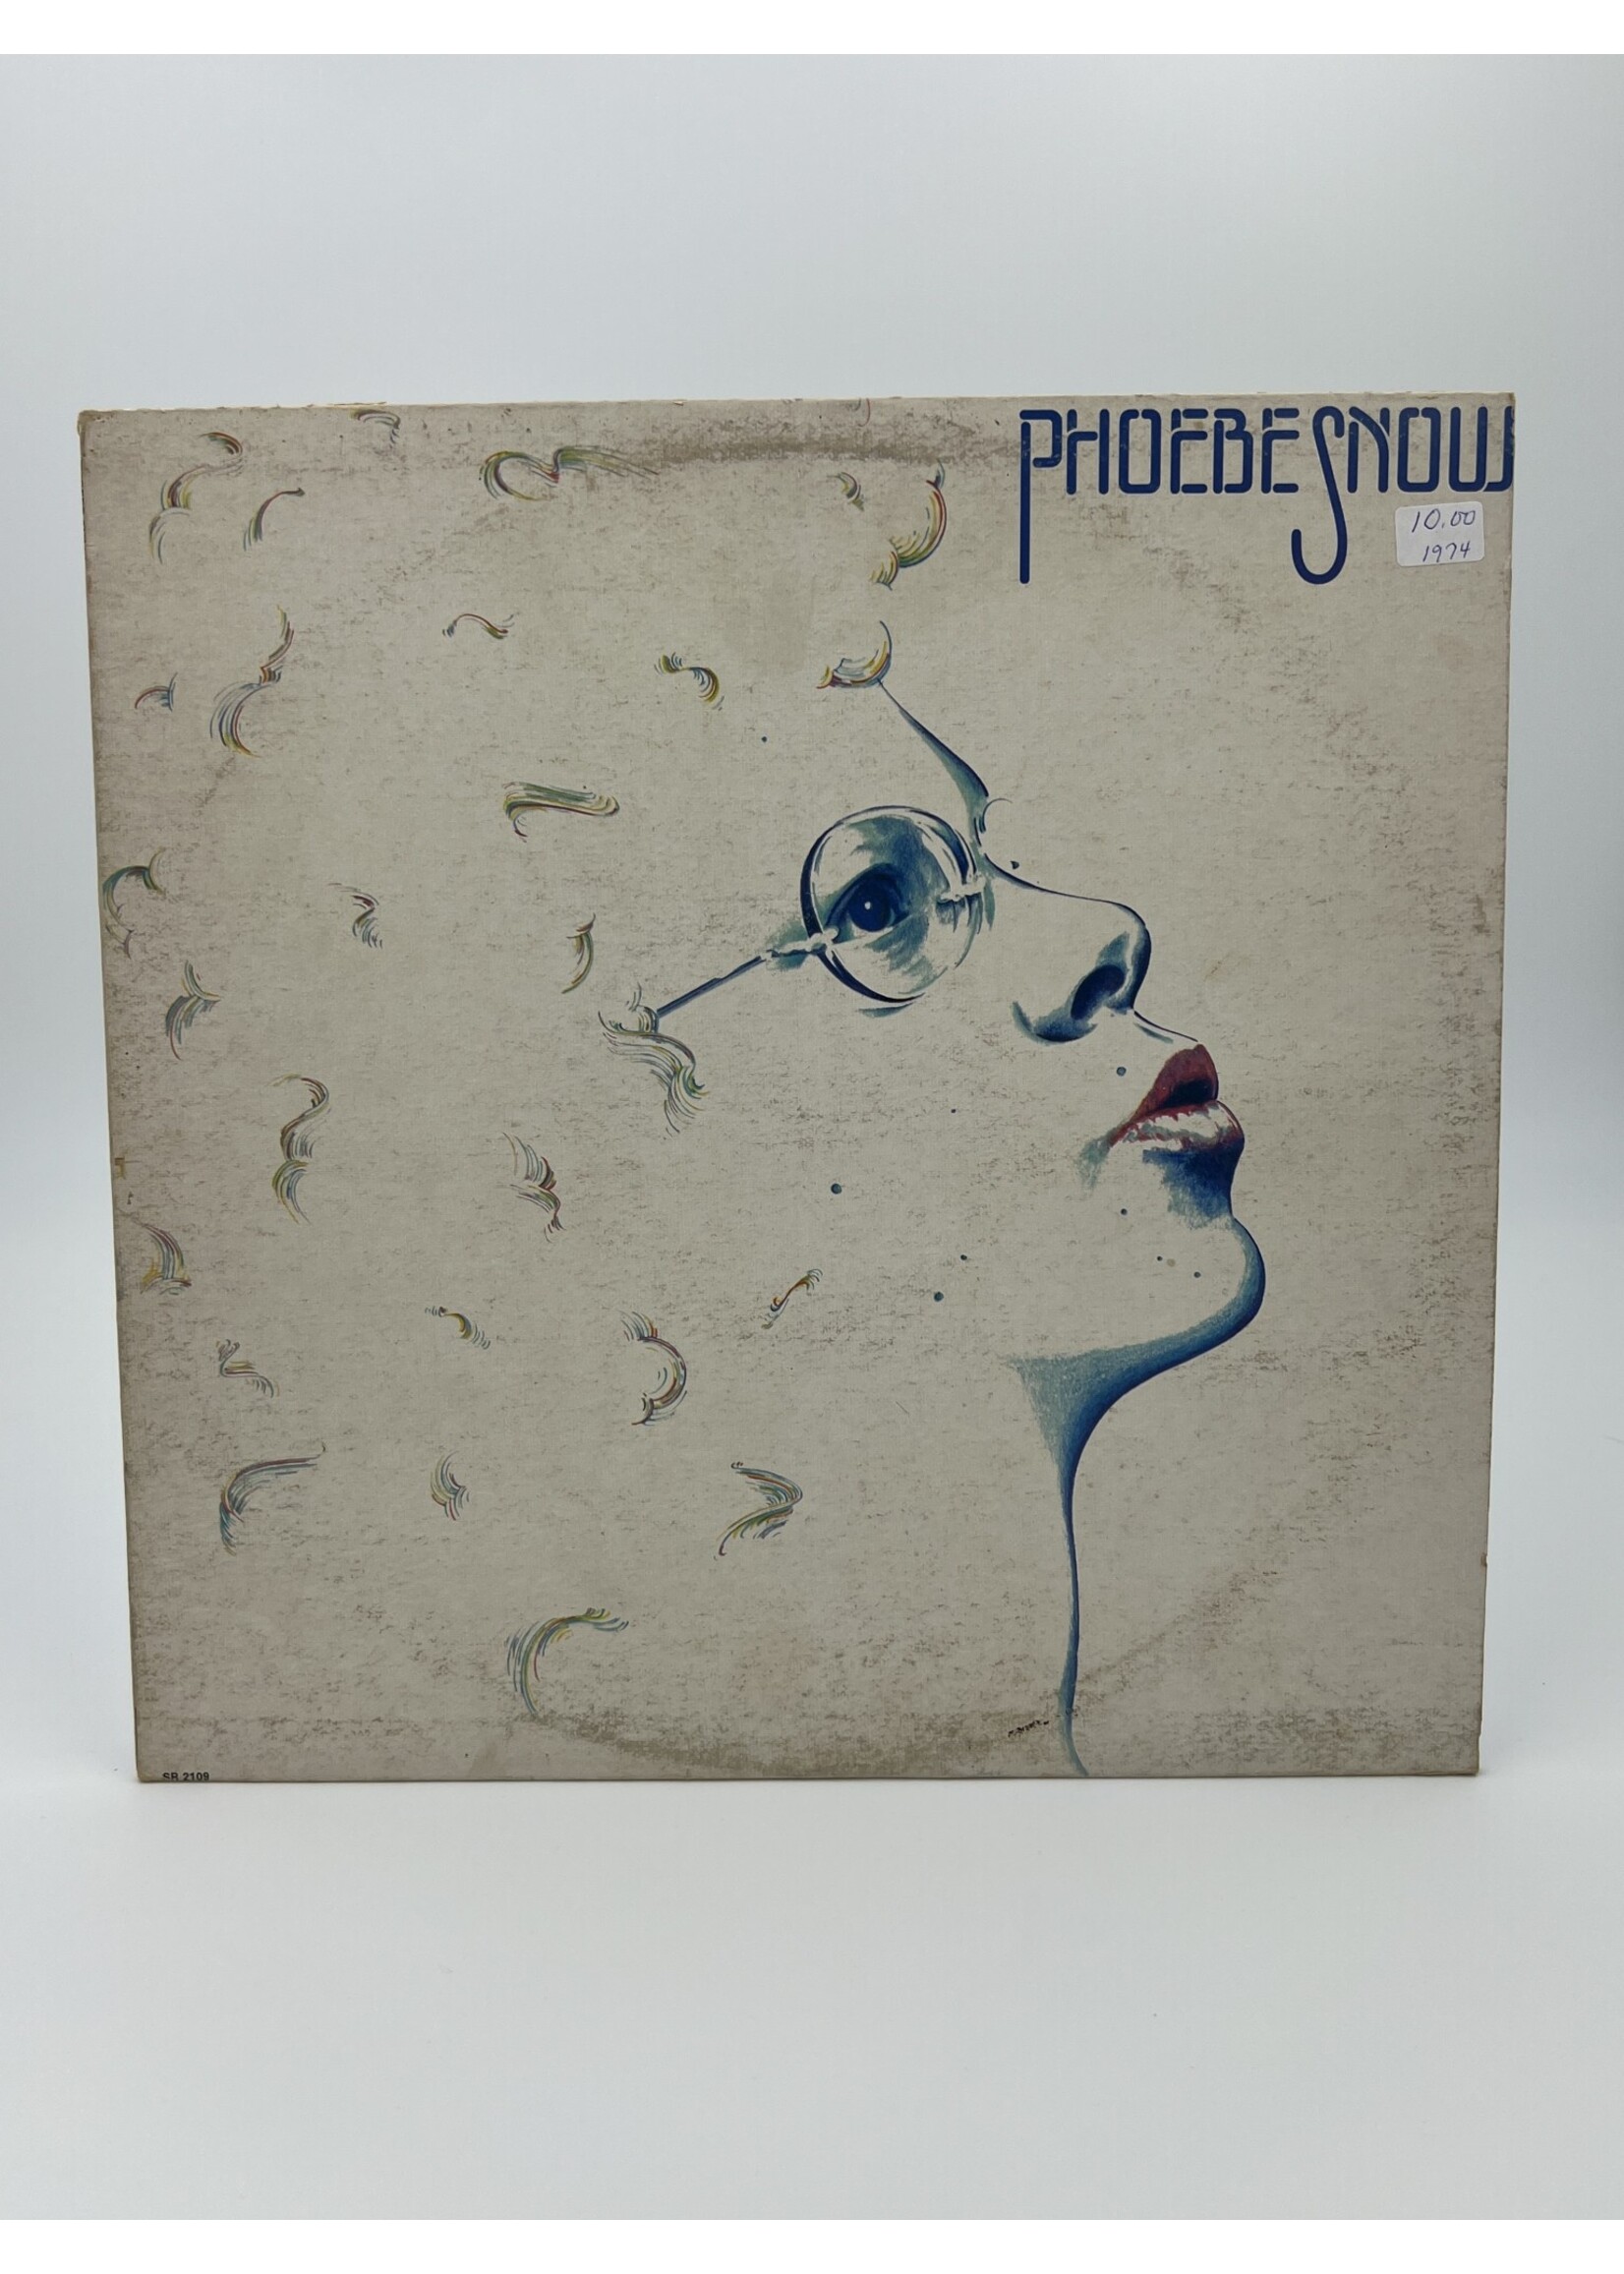 LP Phoebe Snow Self Titled LP Record